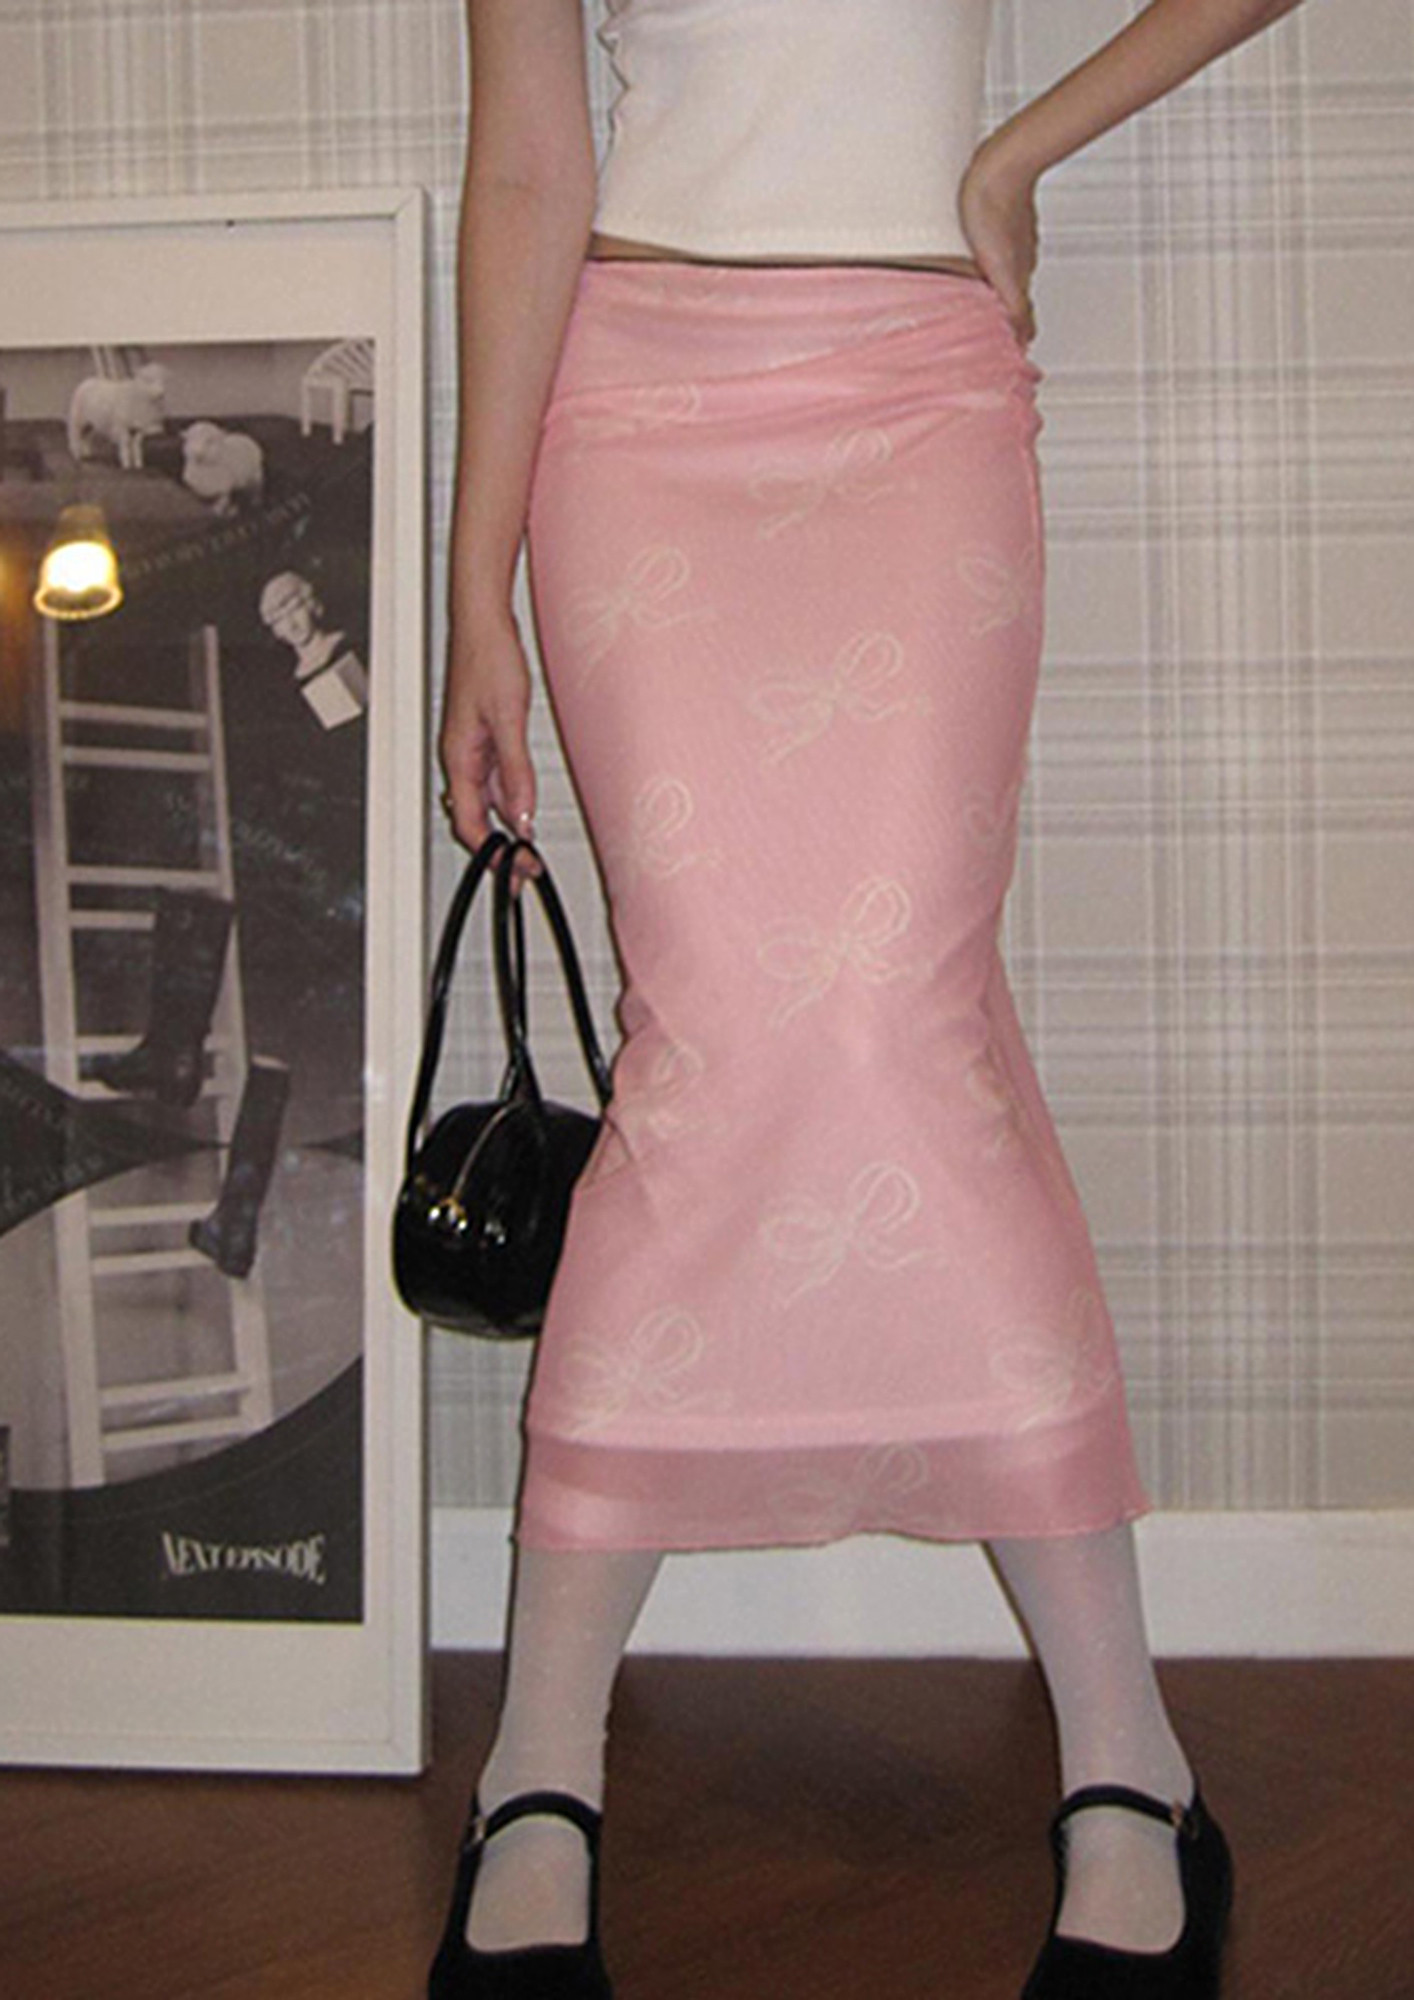 Pink Skirt - Buy Pink Skirt online in India